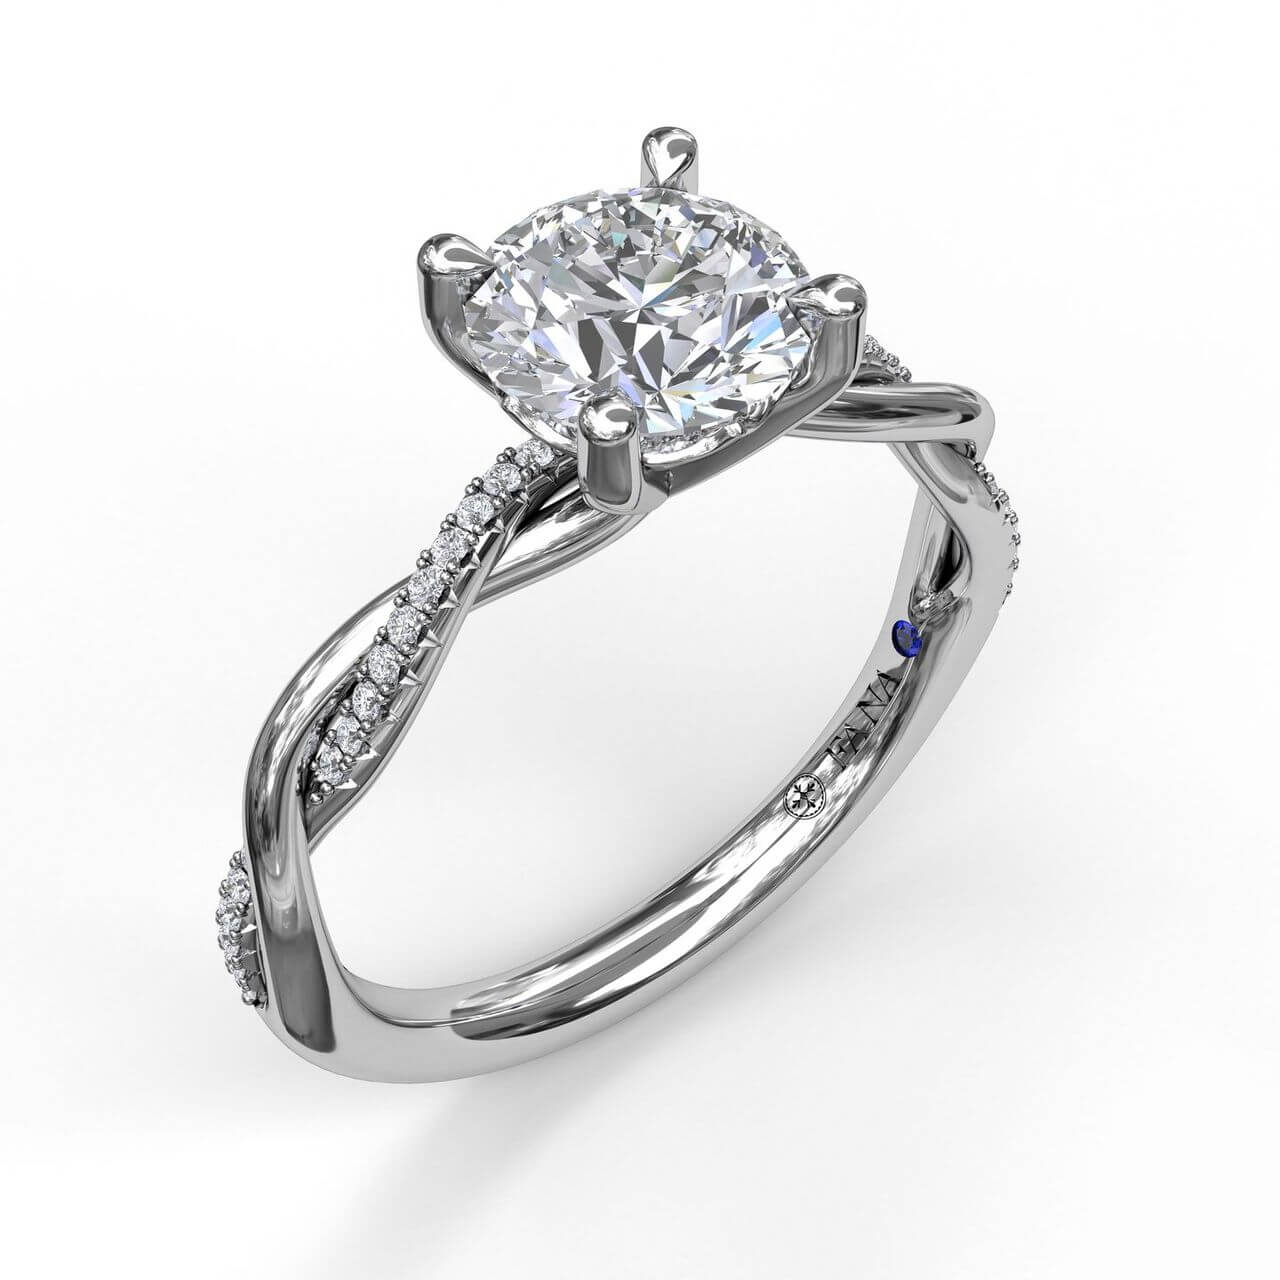 FANA 14 KT White Gold Twist Round Diamond Engagement Ring S3901/WG